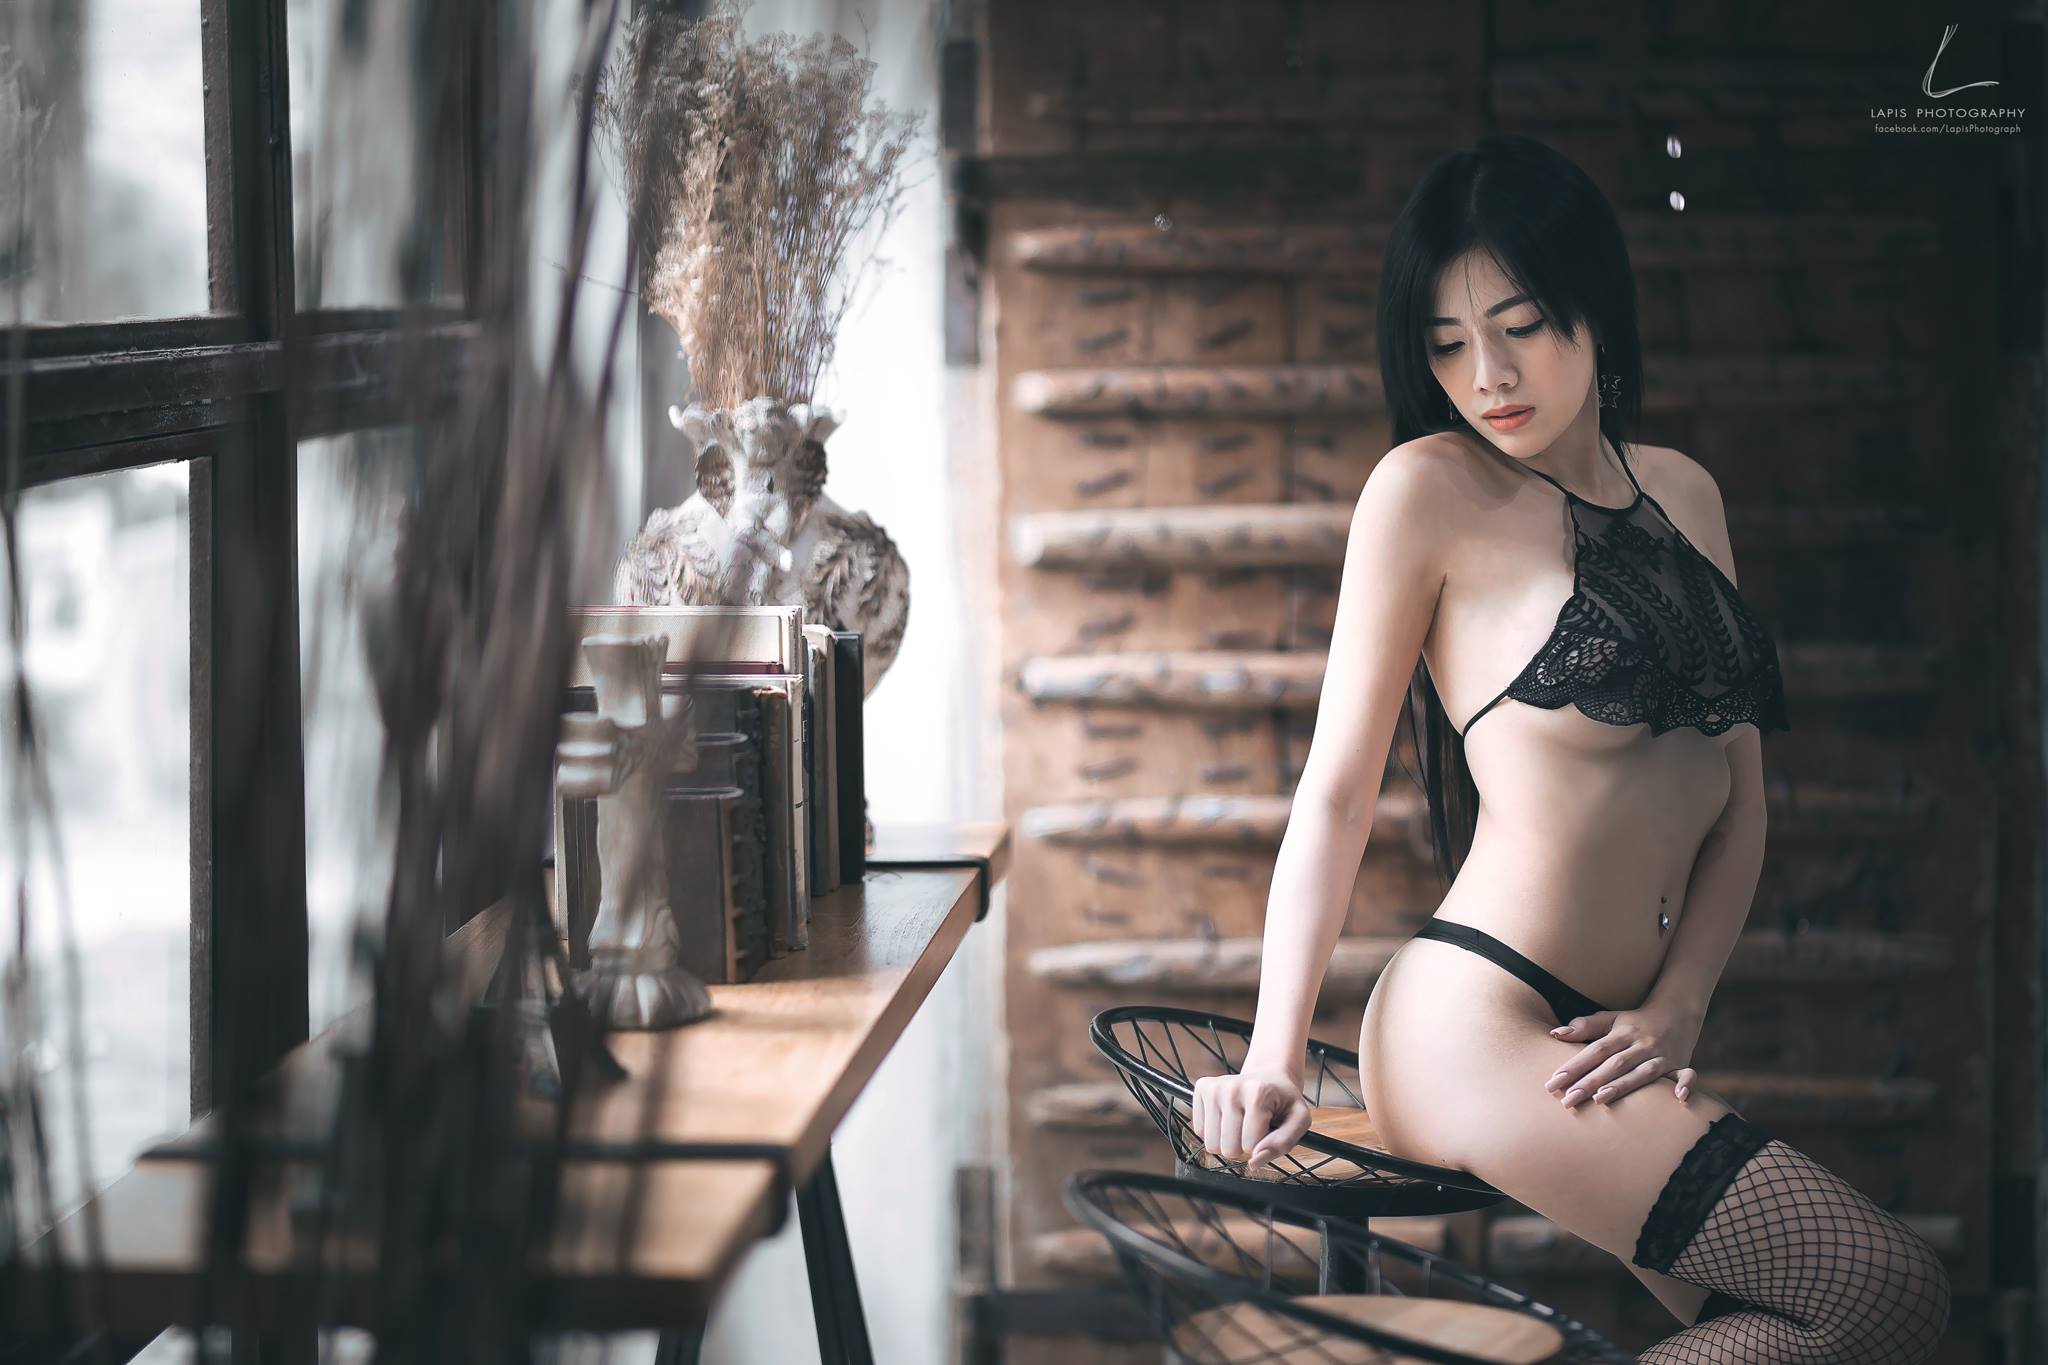 People 2048x1365 Utjima Thongchan Asian Thailand model model black lingerie LAPIS Photography women